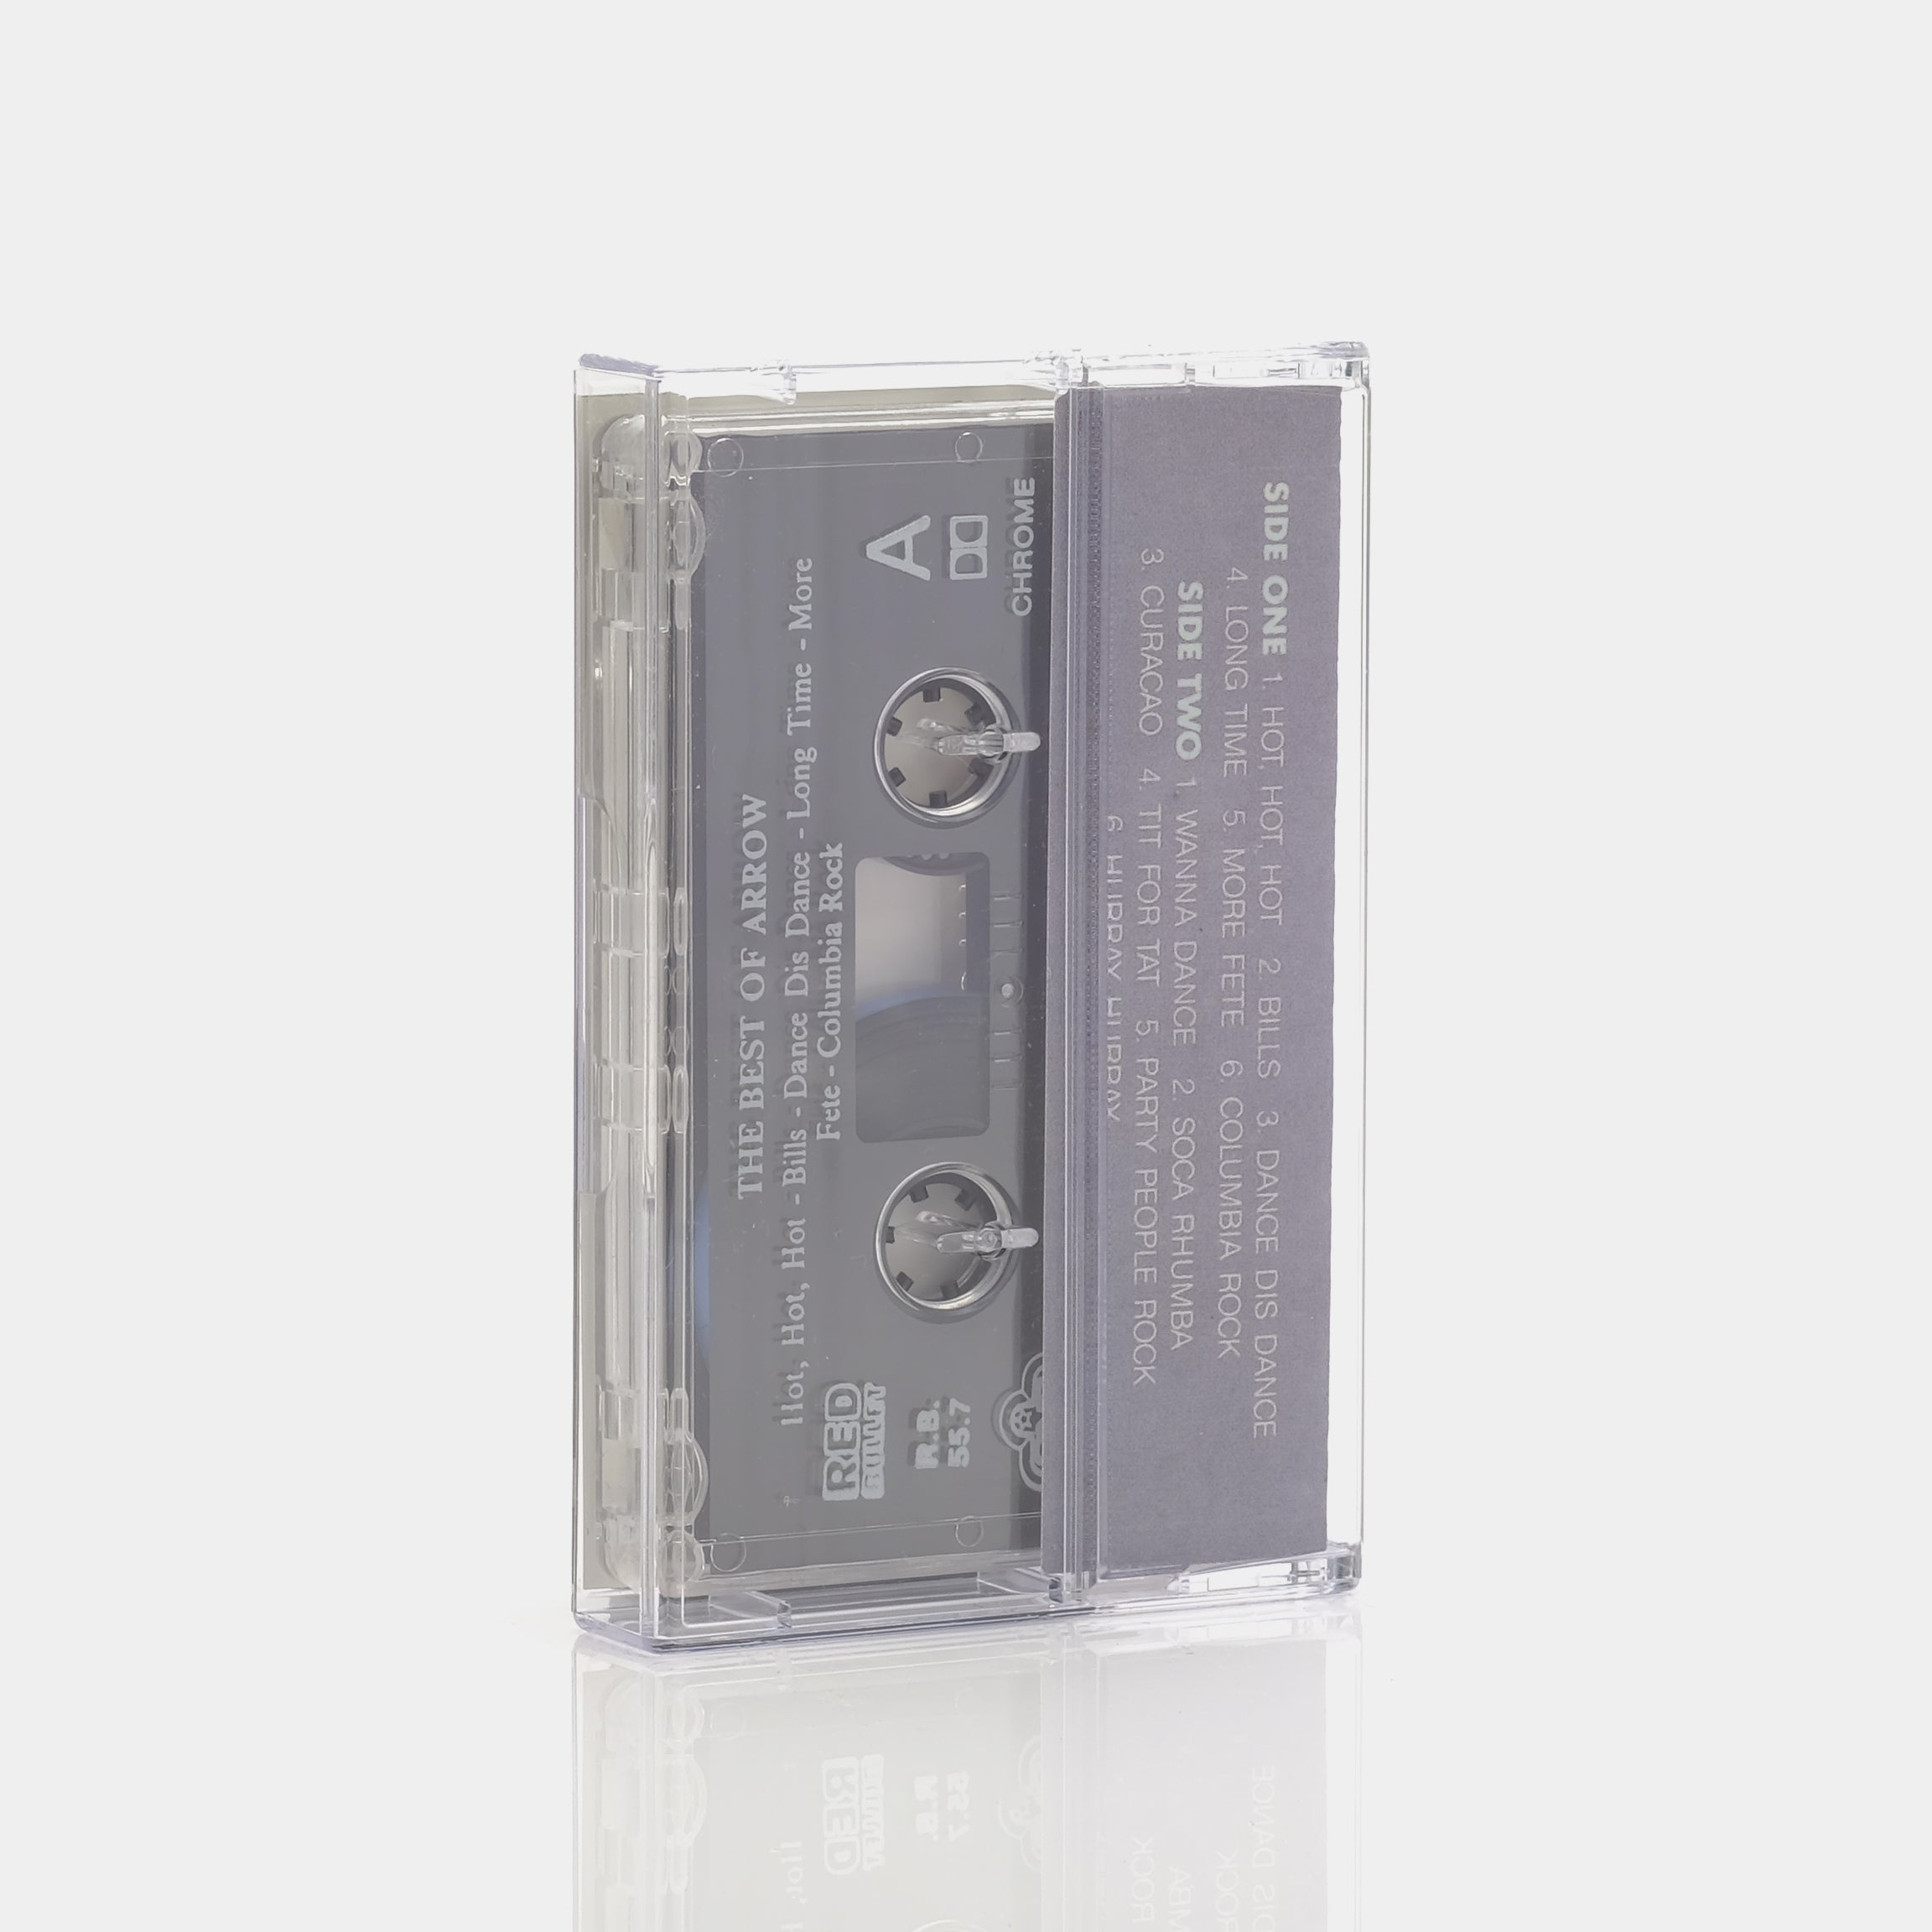 Arrow - The Best Of Arrow Cassette Tape